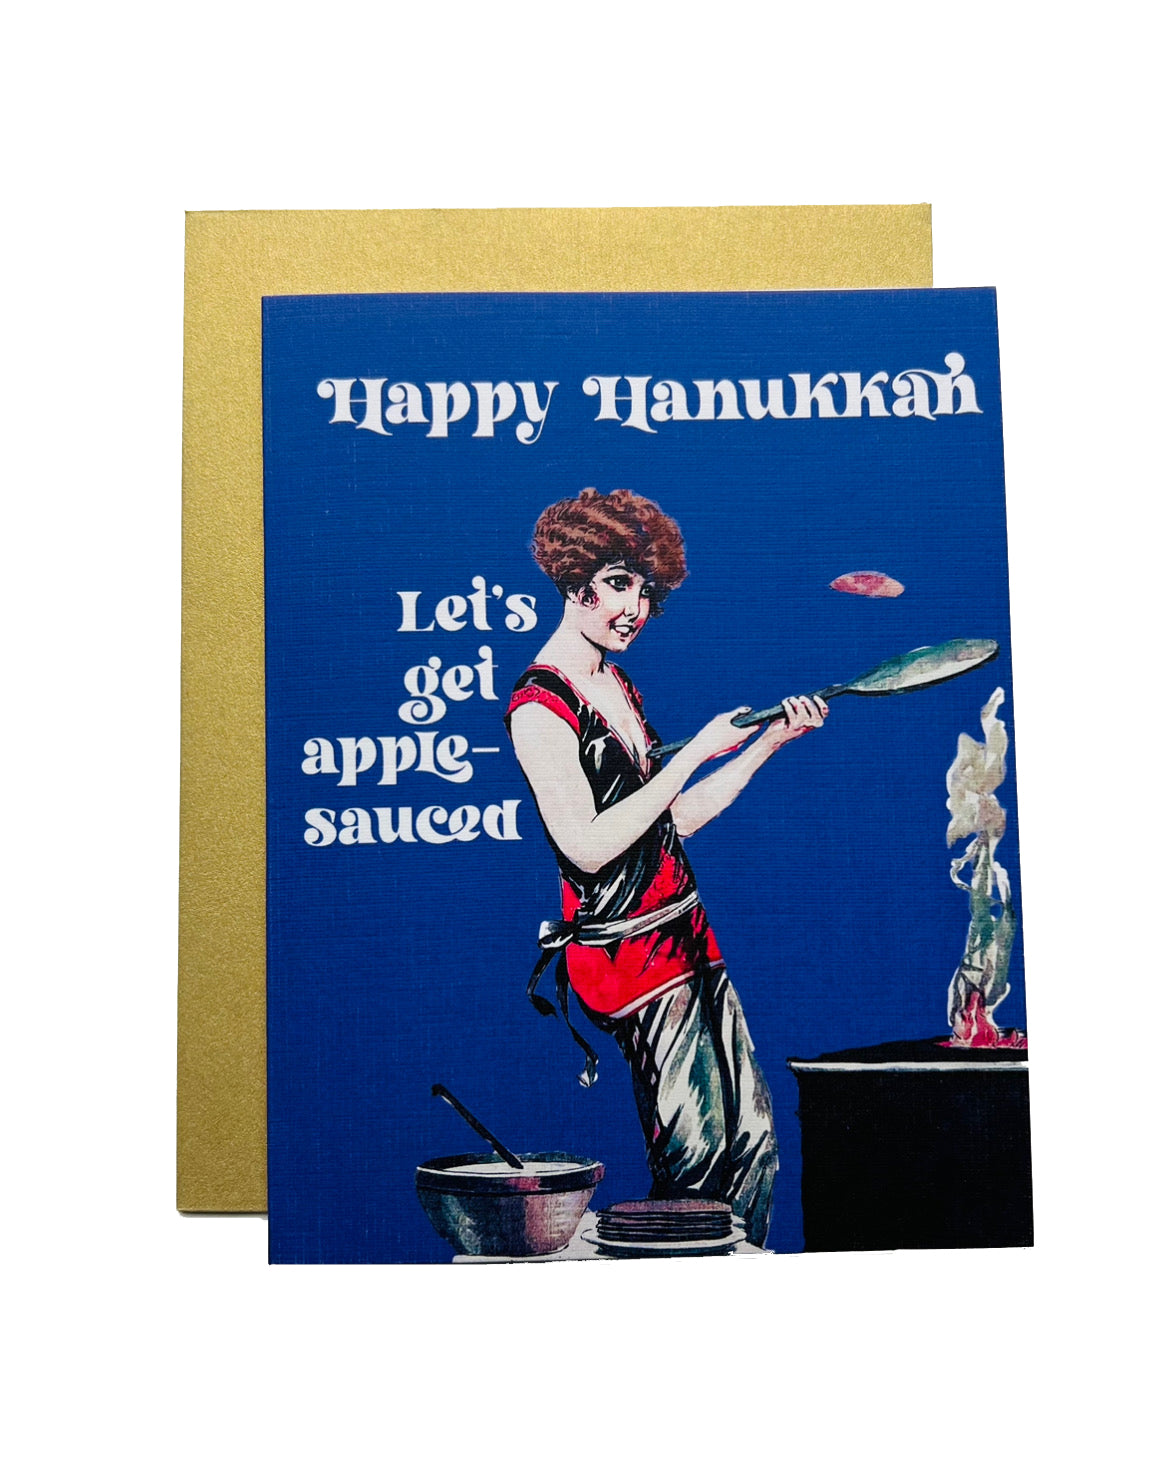 Apple-Sauced Hanukkah Card